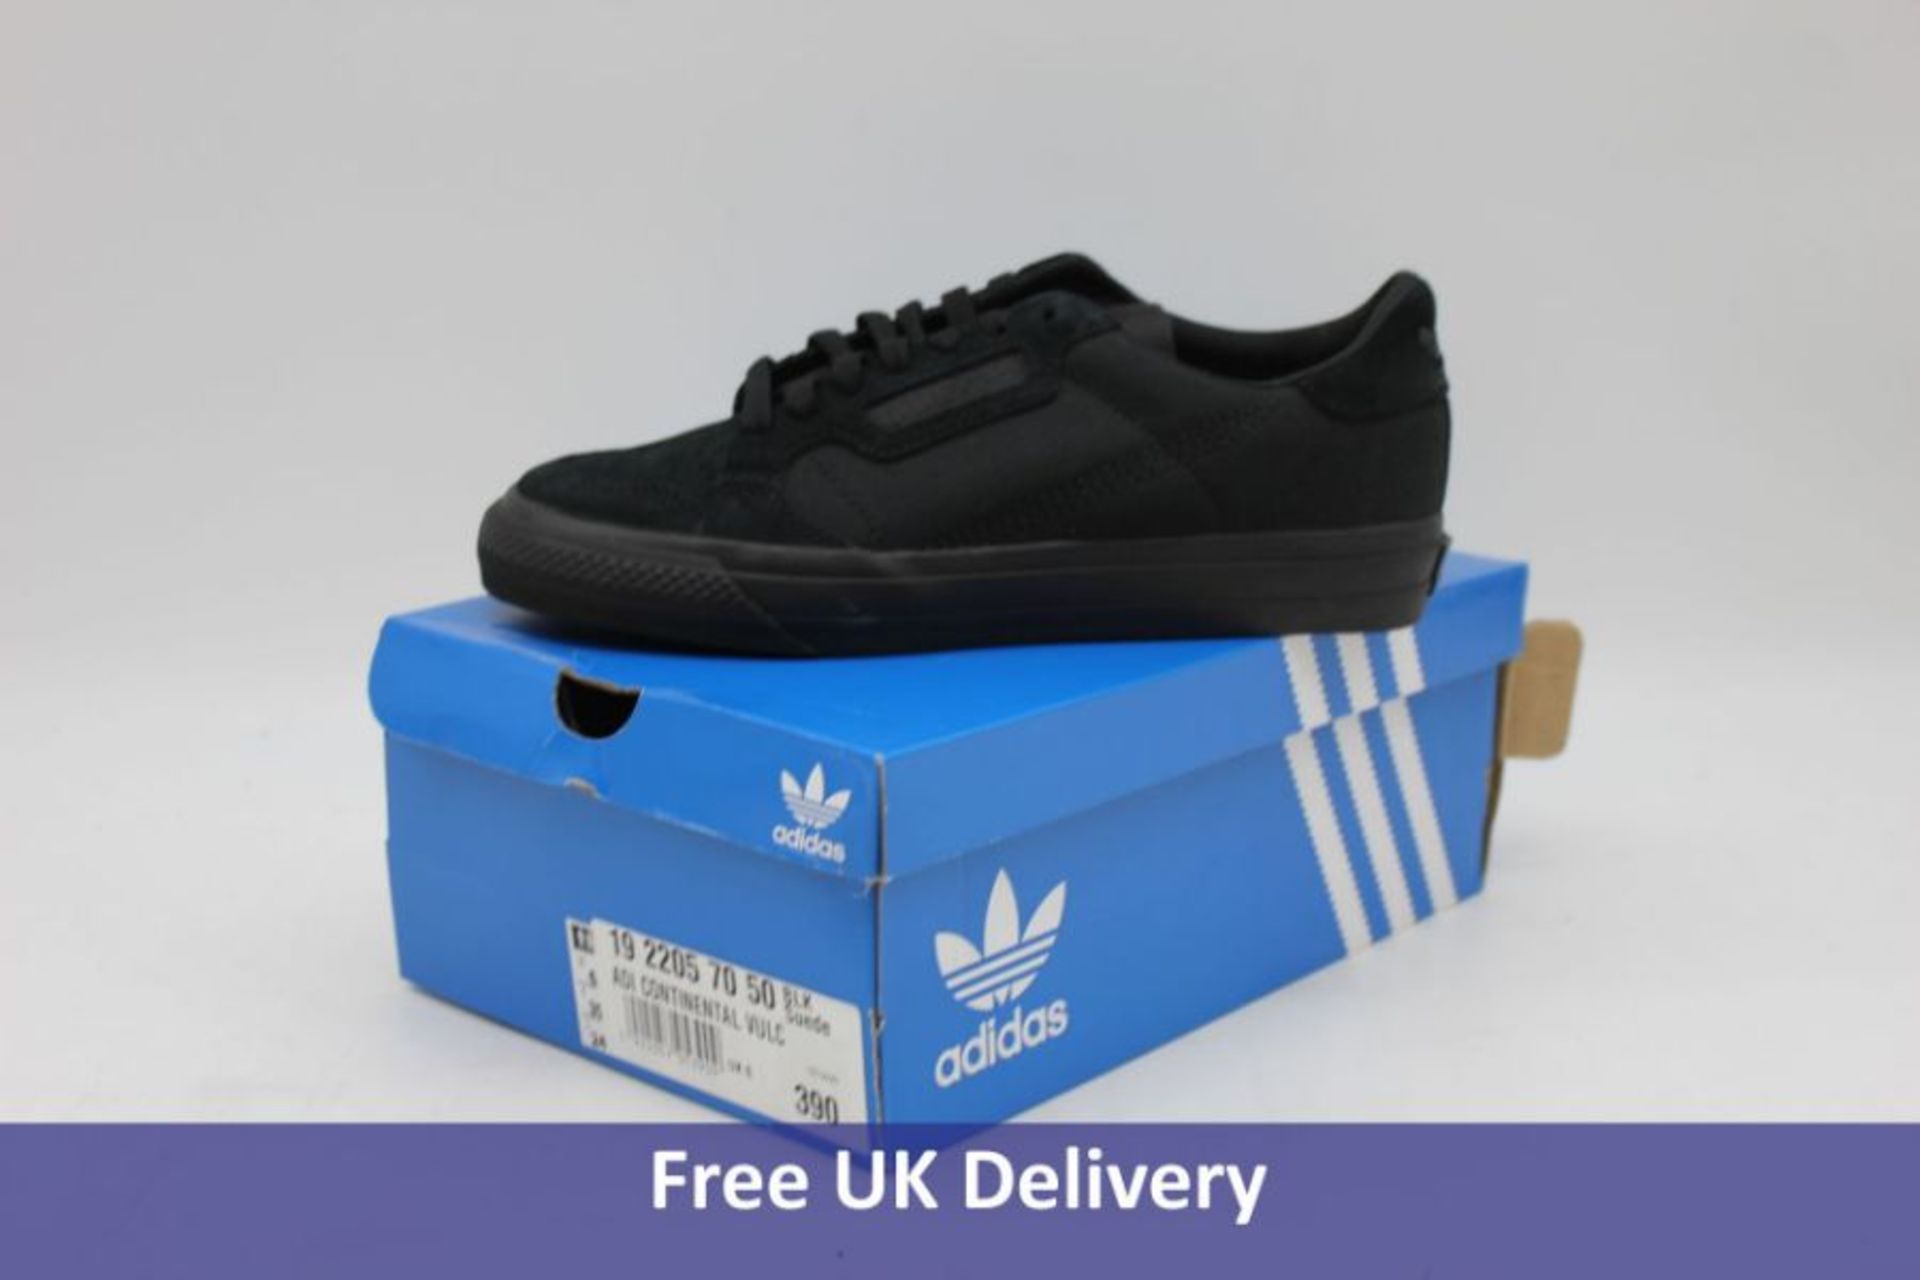 Adidas Continental Vulc Canvas Trainers, Black, UK 6